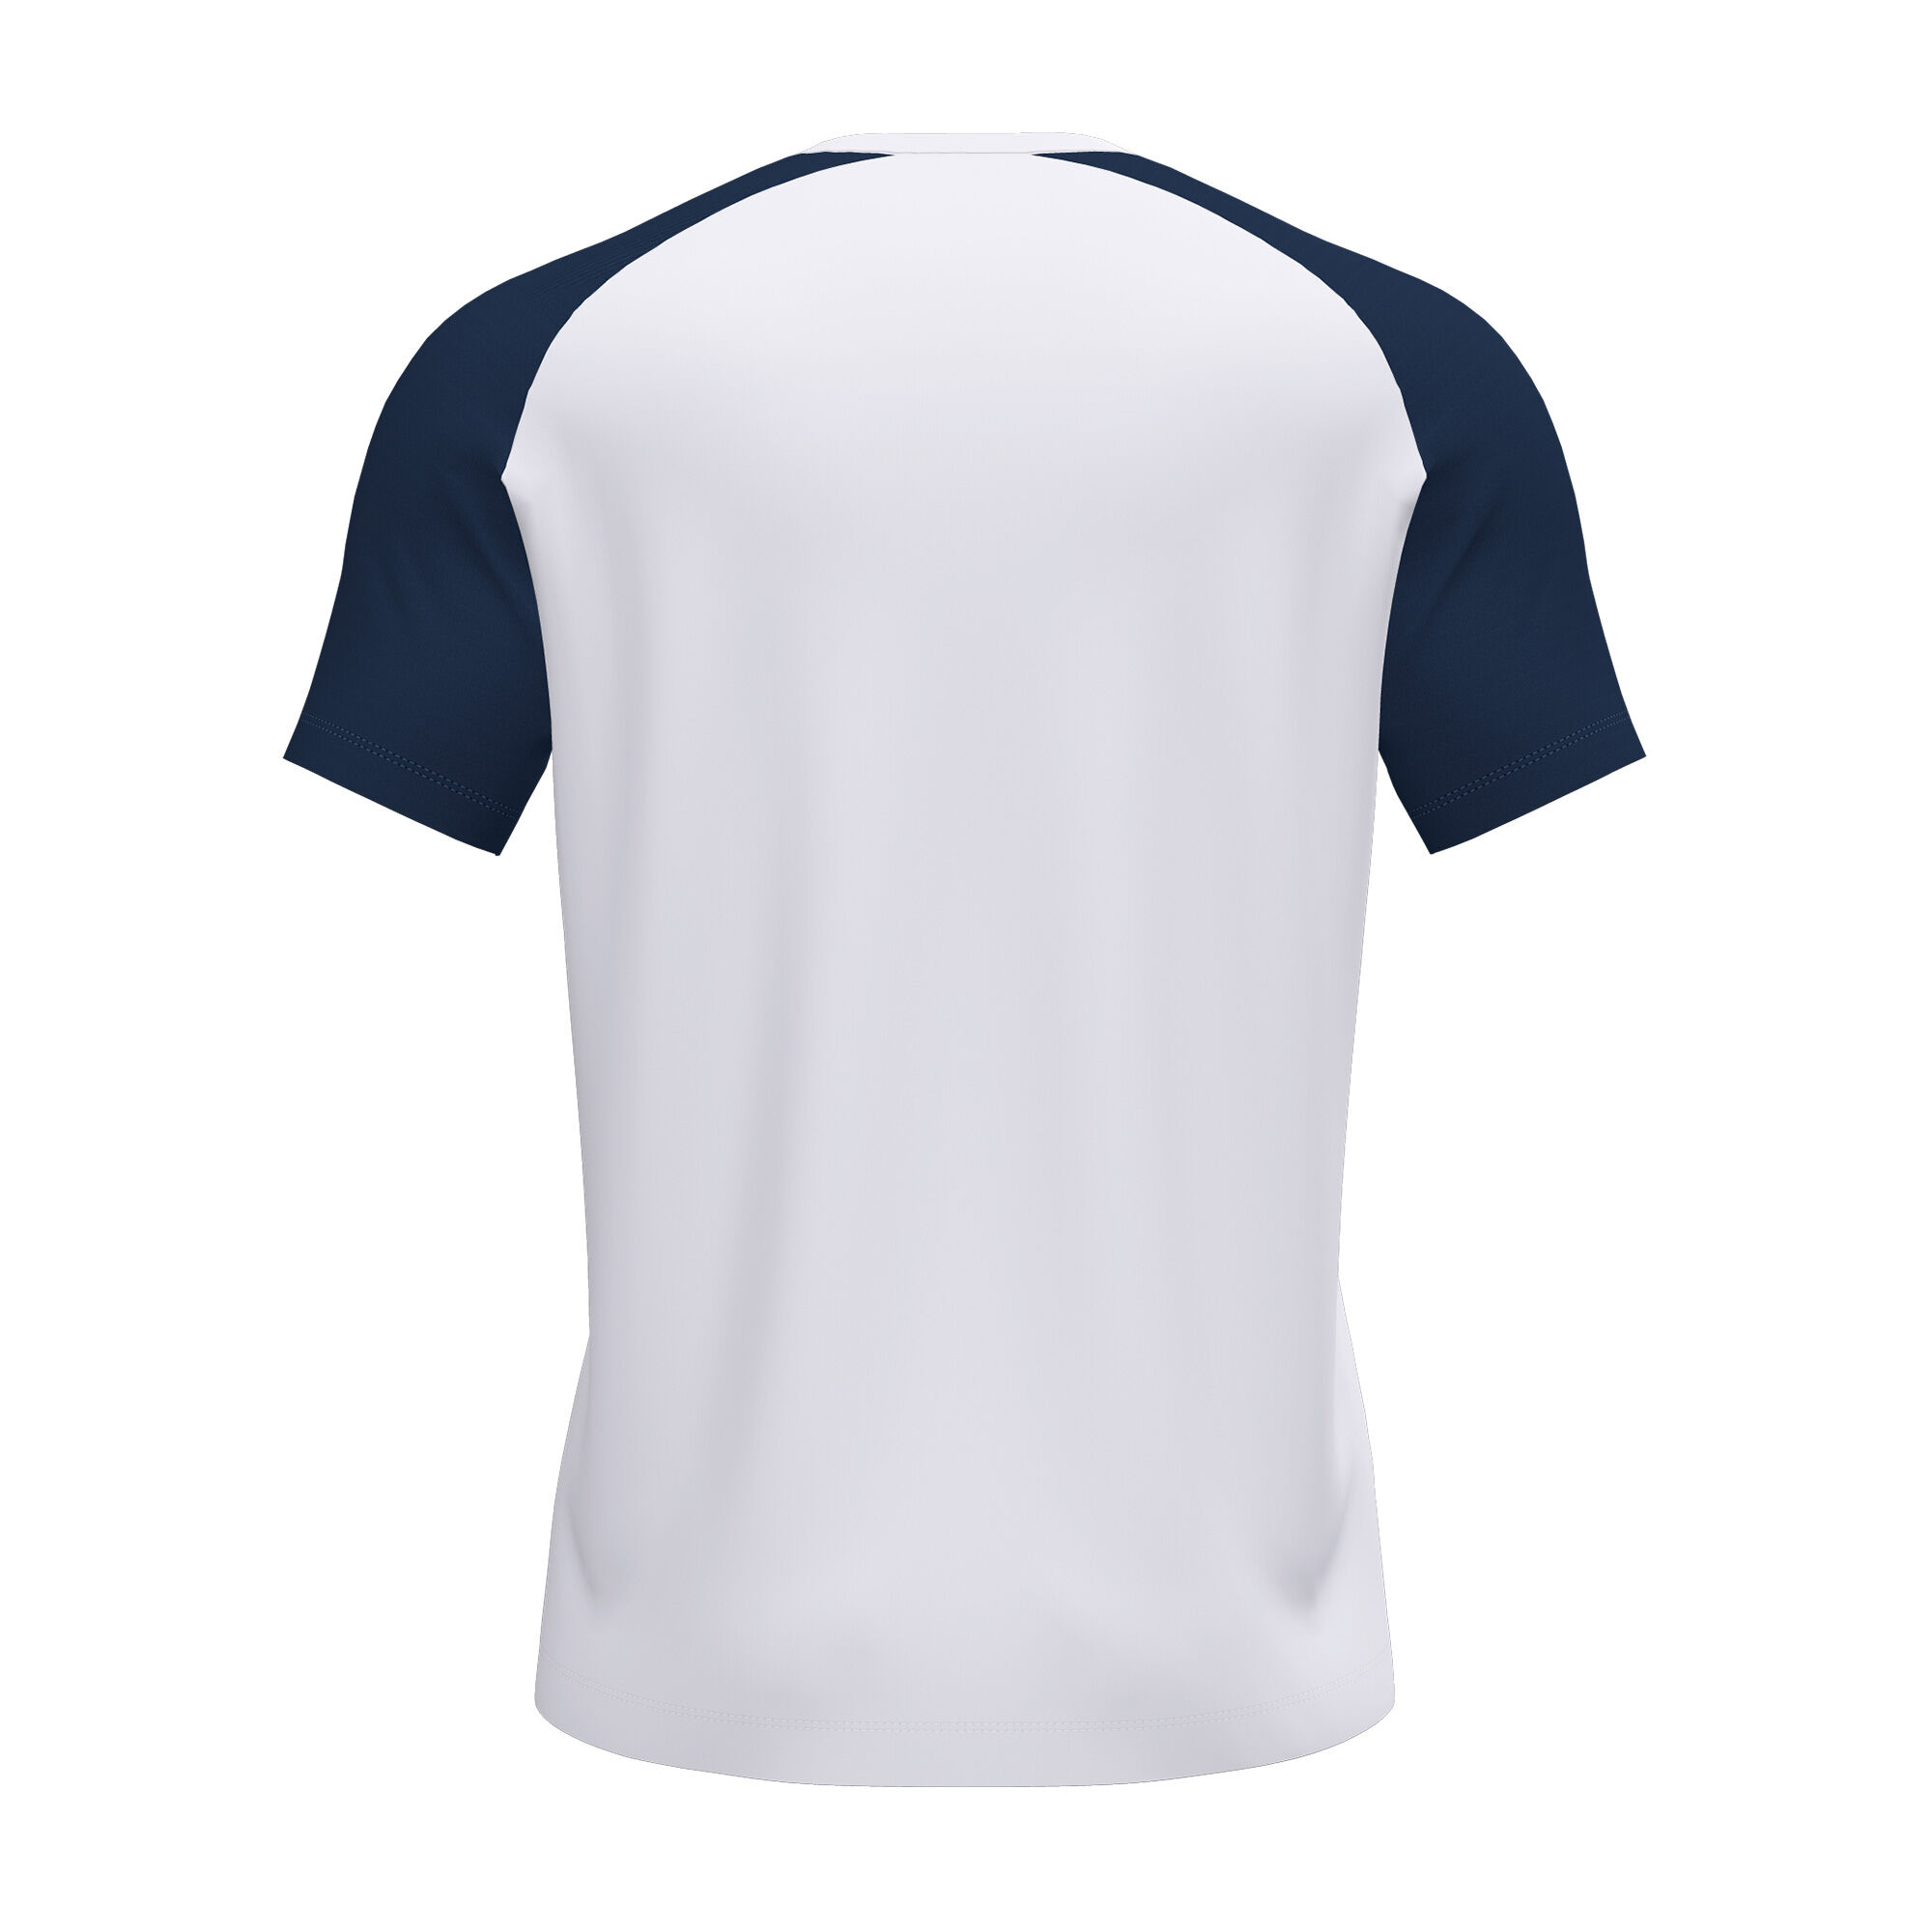 Camiseta manga corta hombre Academy IV blanco marino